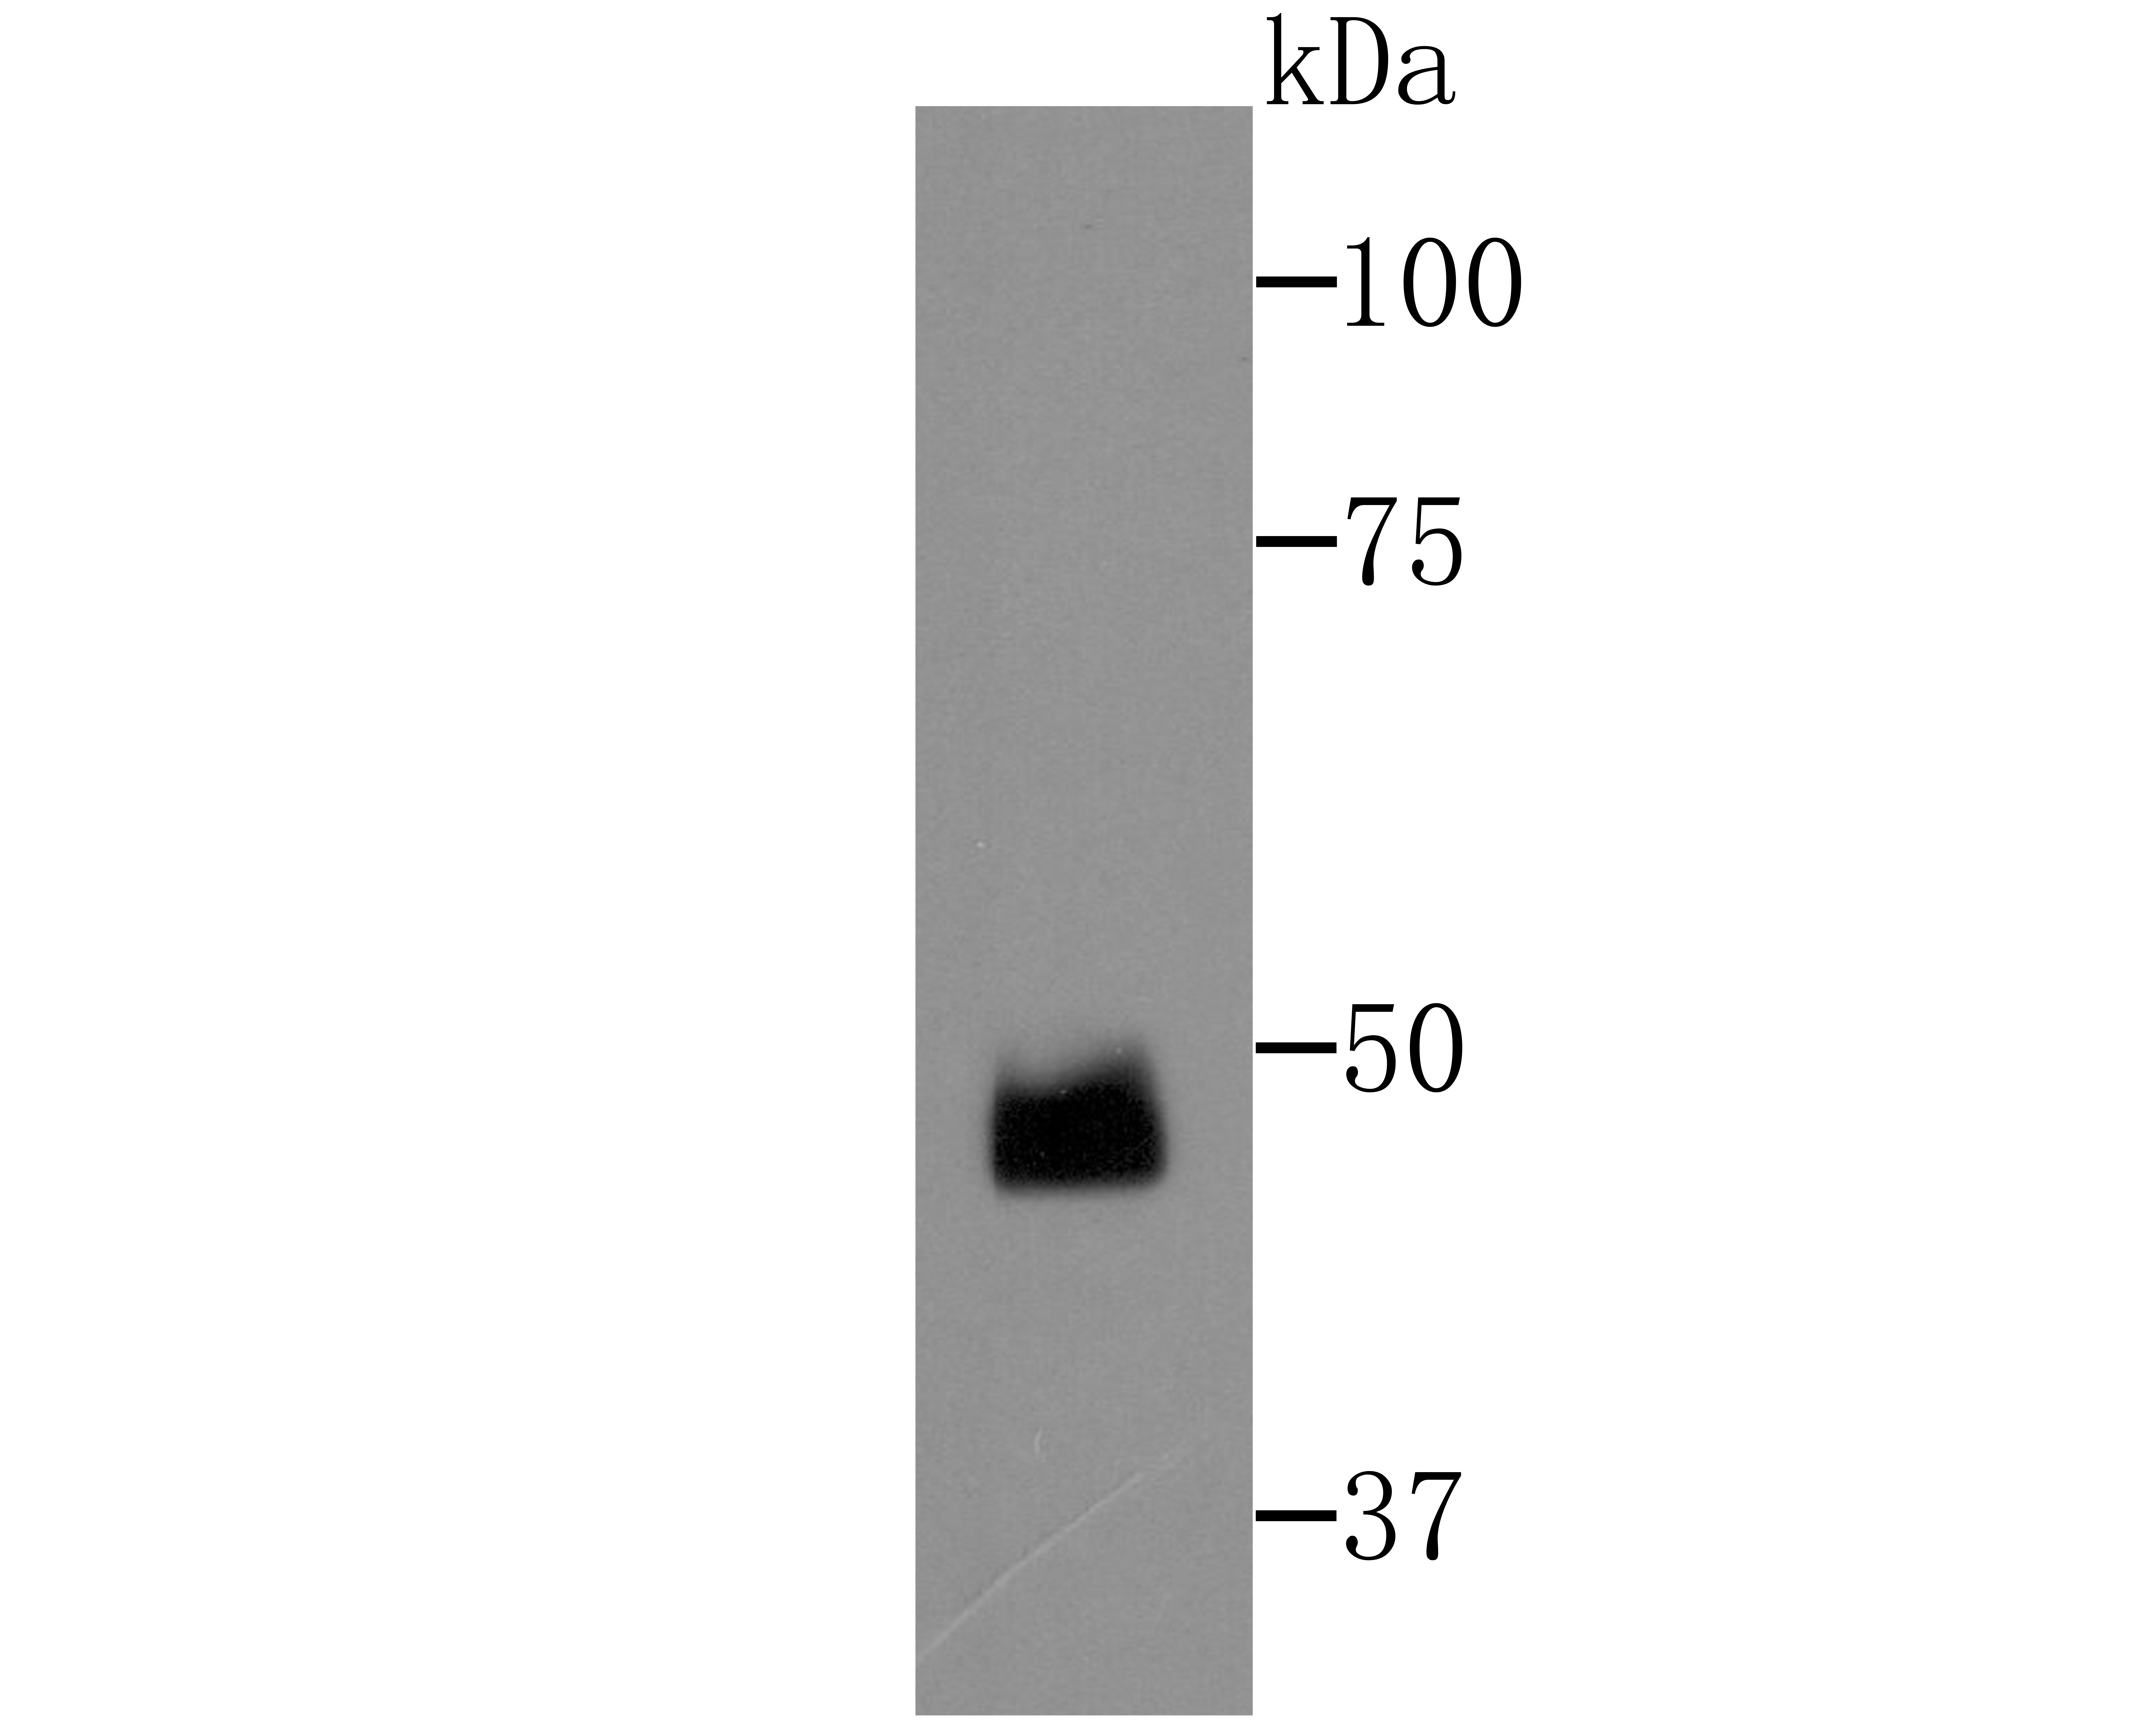 Western blot analysis of FEZF2 on Zebrafish tissue lysates using anti-FEZF2 antibody at 1/500 dilution.